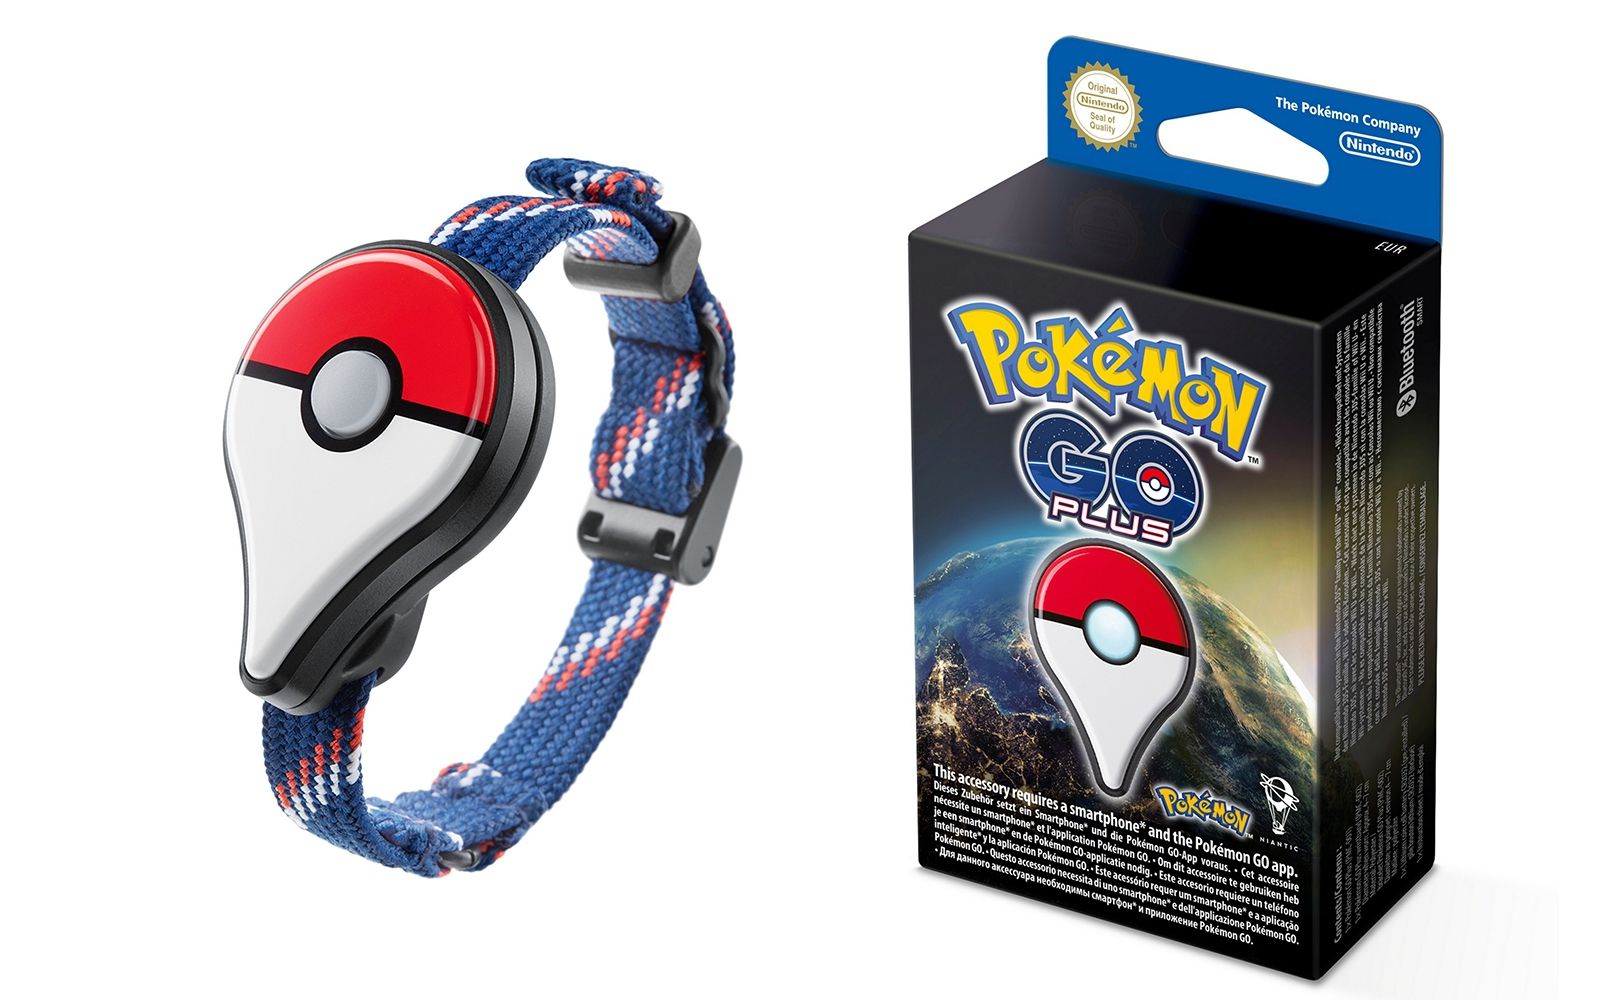 Pokémon GO Plus lands in Europe - On sale starting September 16th